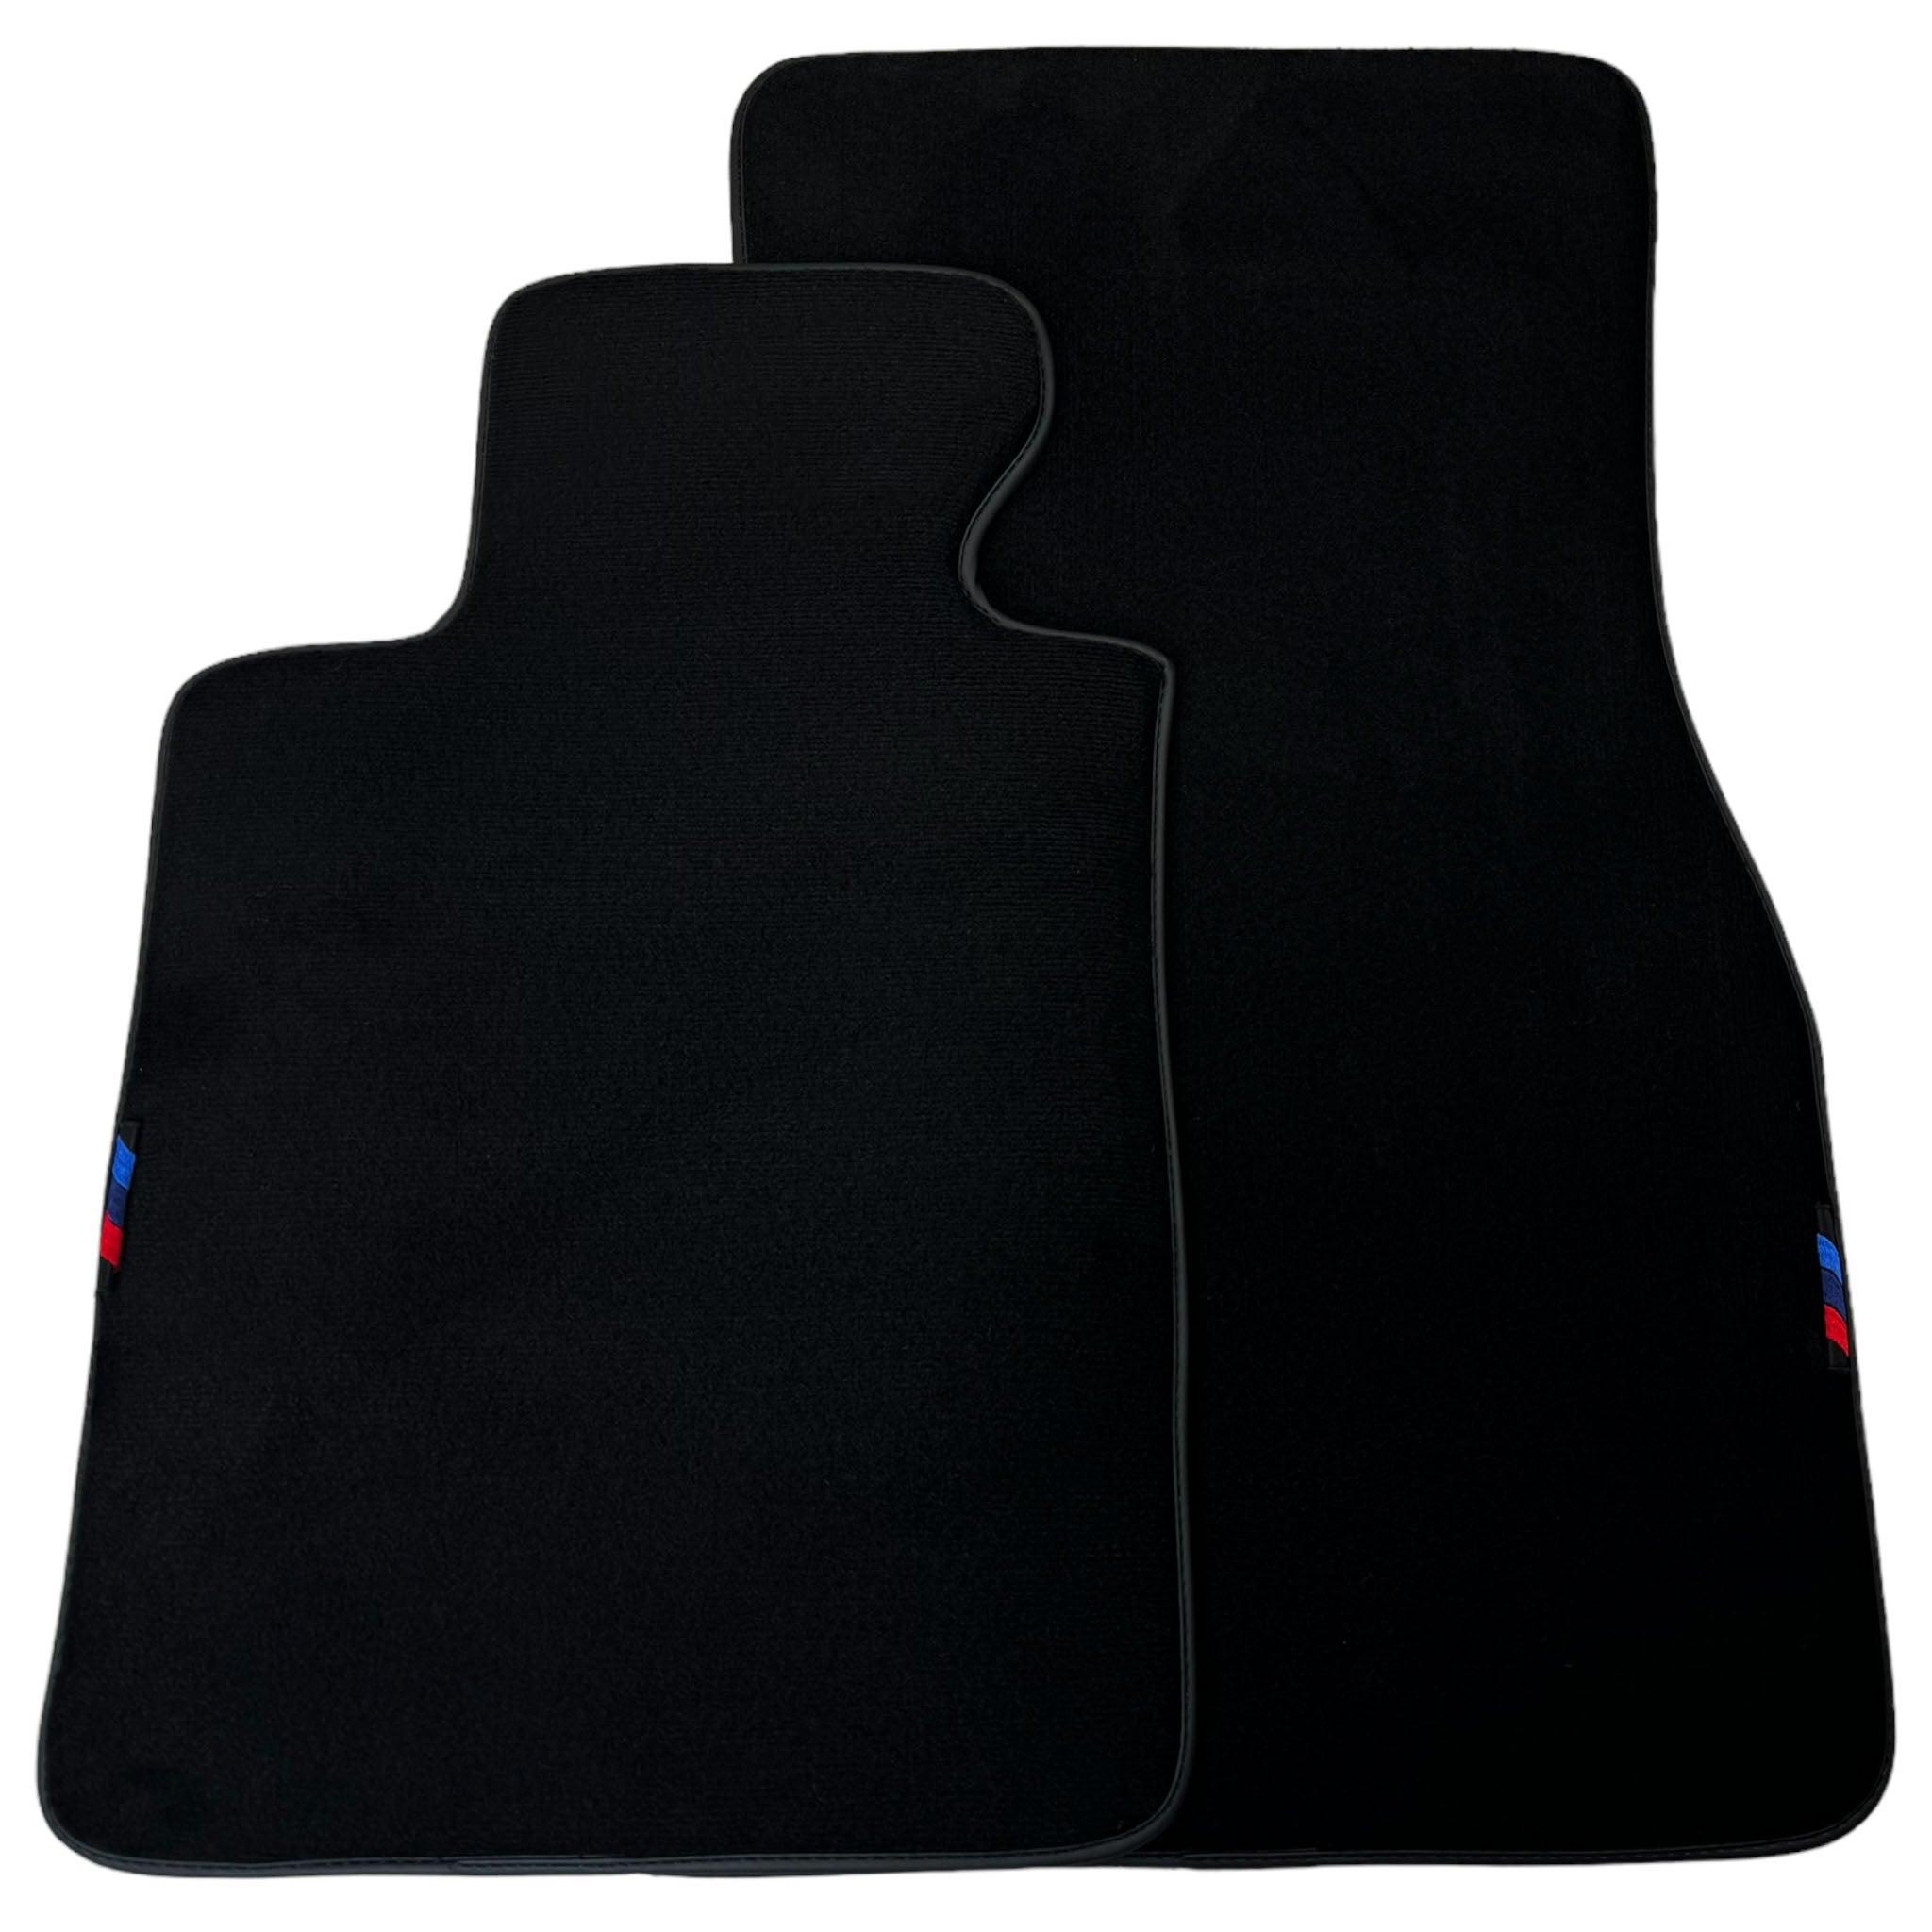 Black Floor Mats For BMW 6 Series E64 Convertible | Black Trim